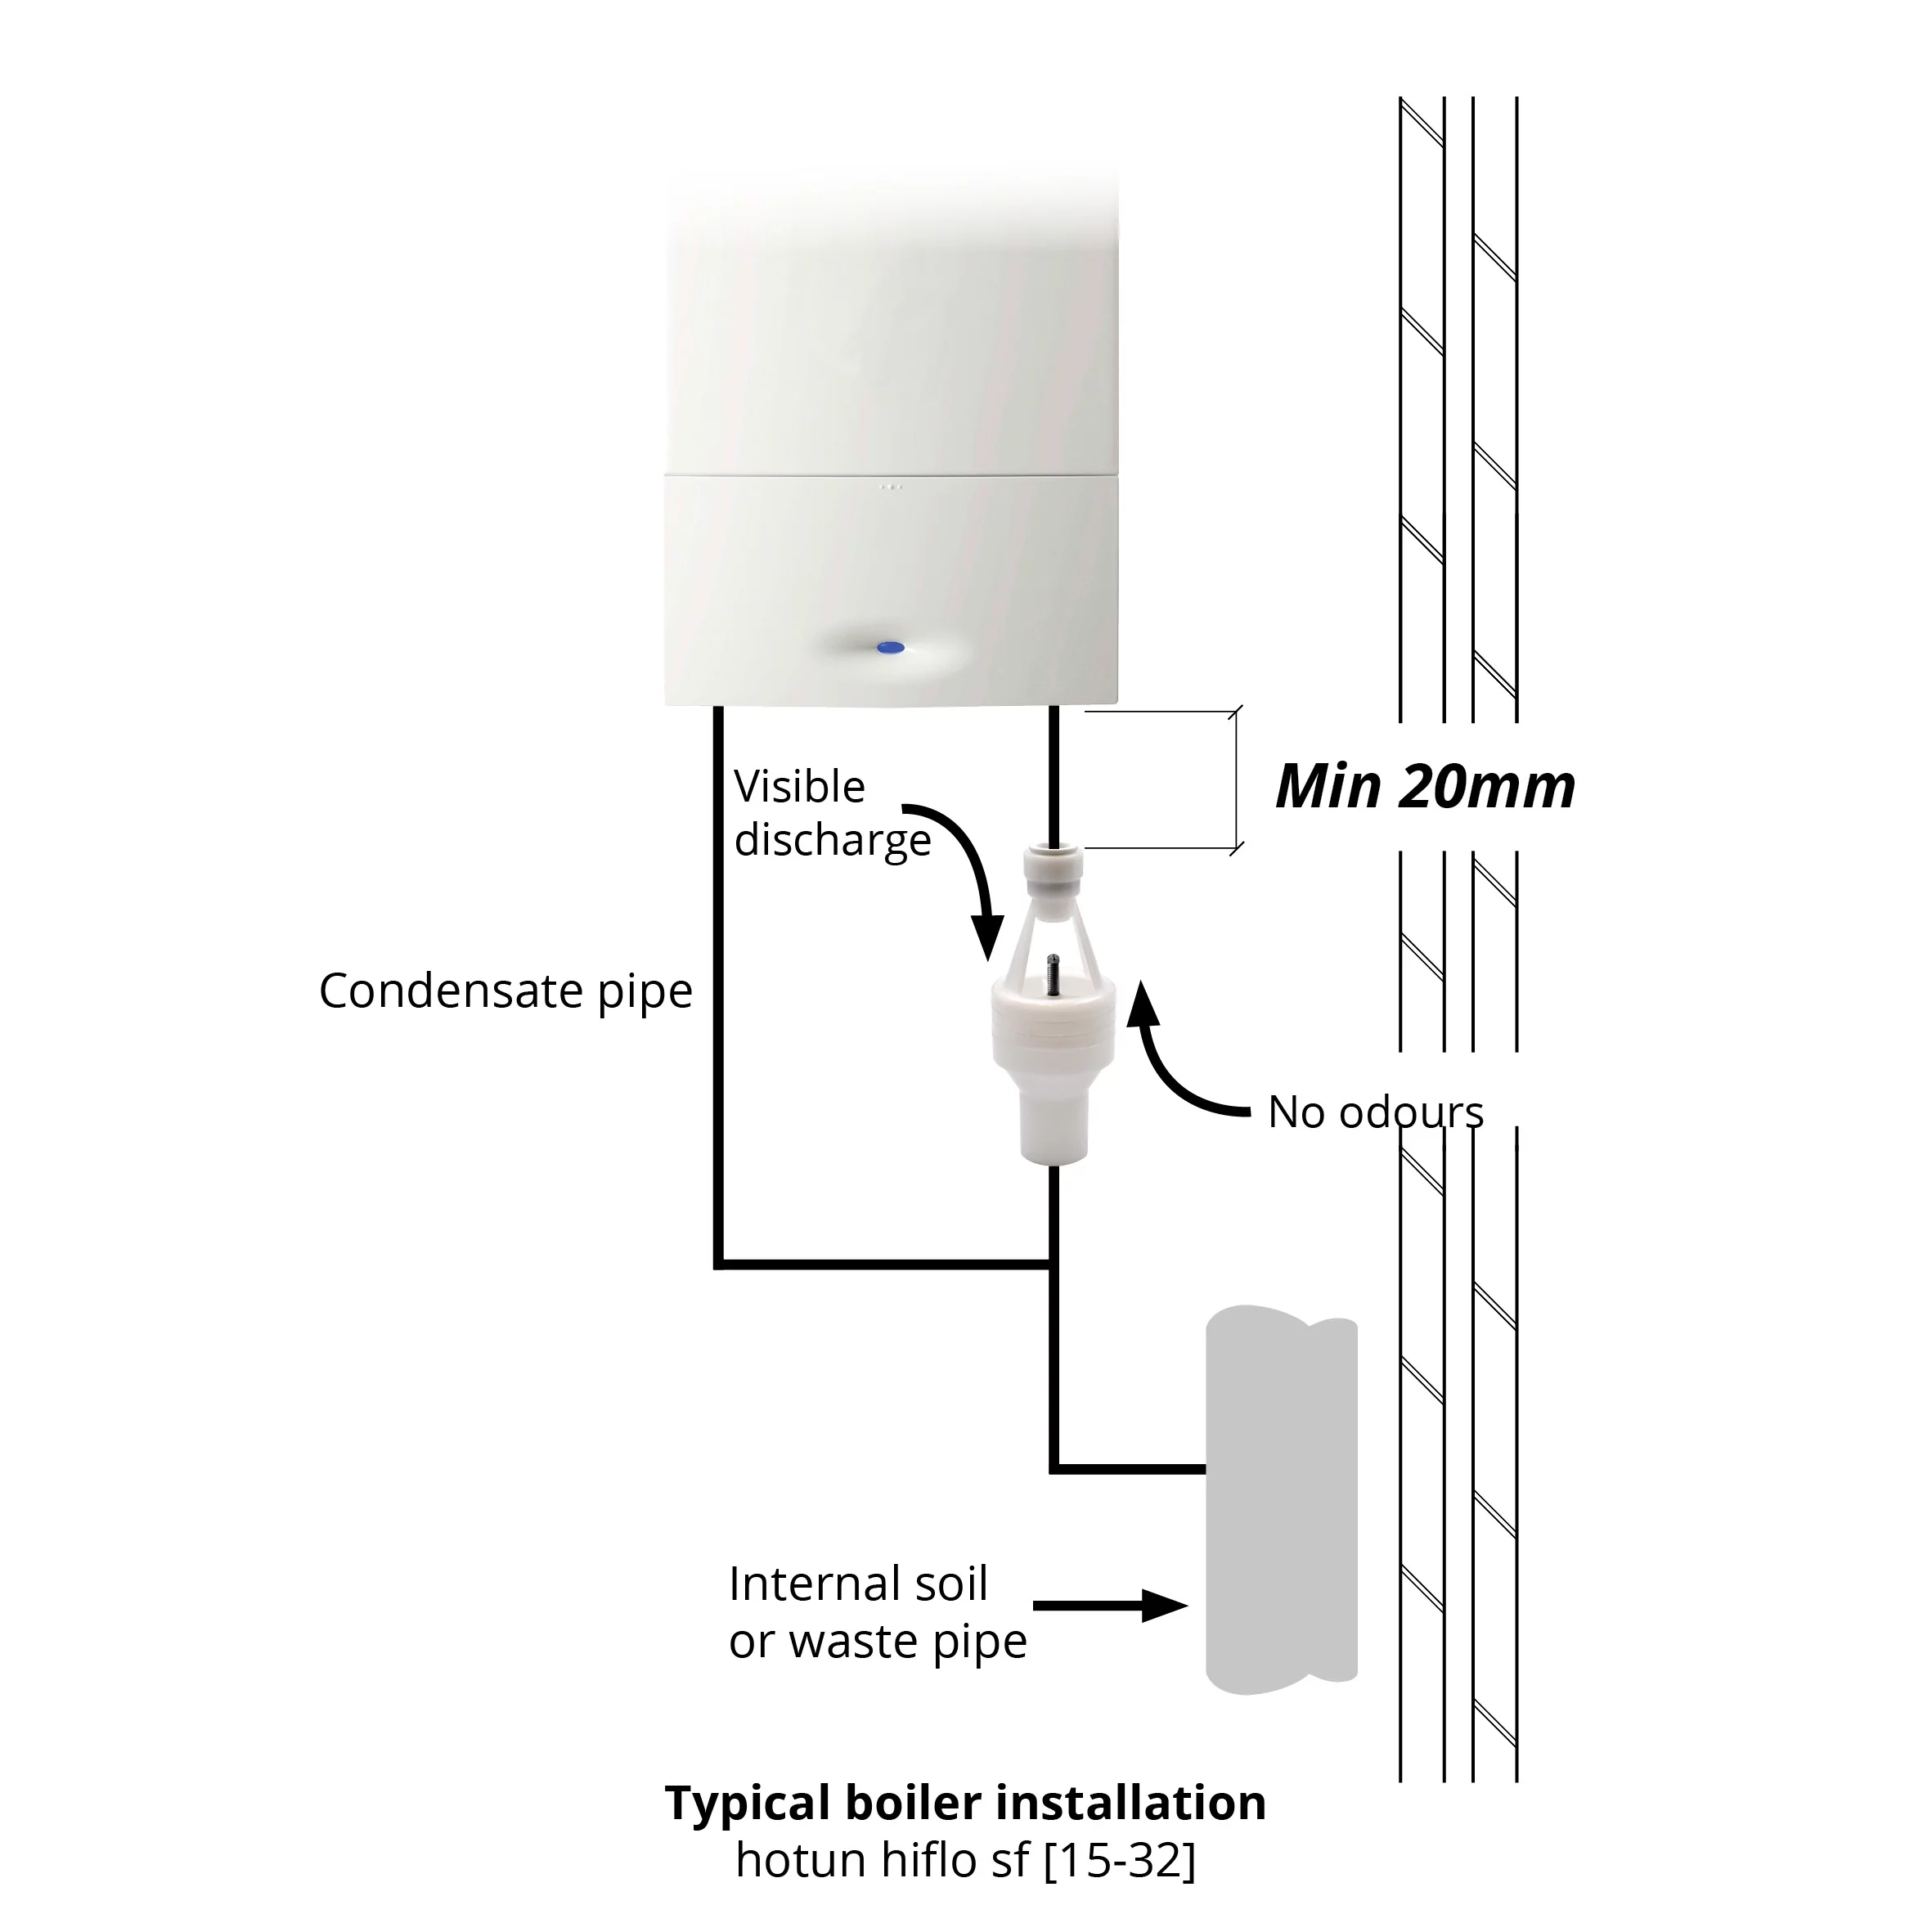 hotun hiflo SF dry trap tundish typical installation diagram on a boiler